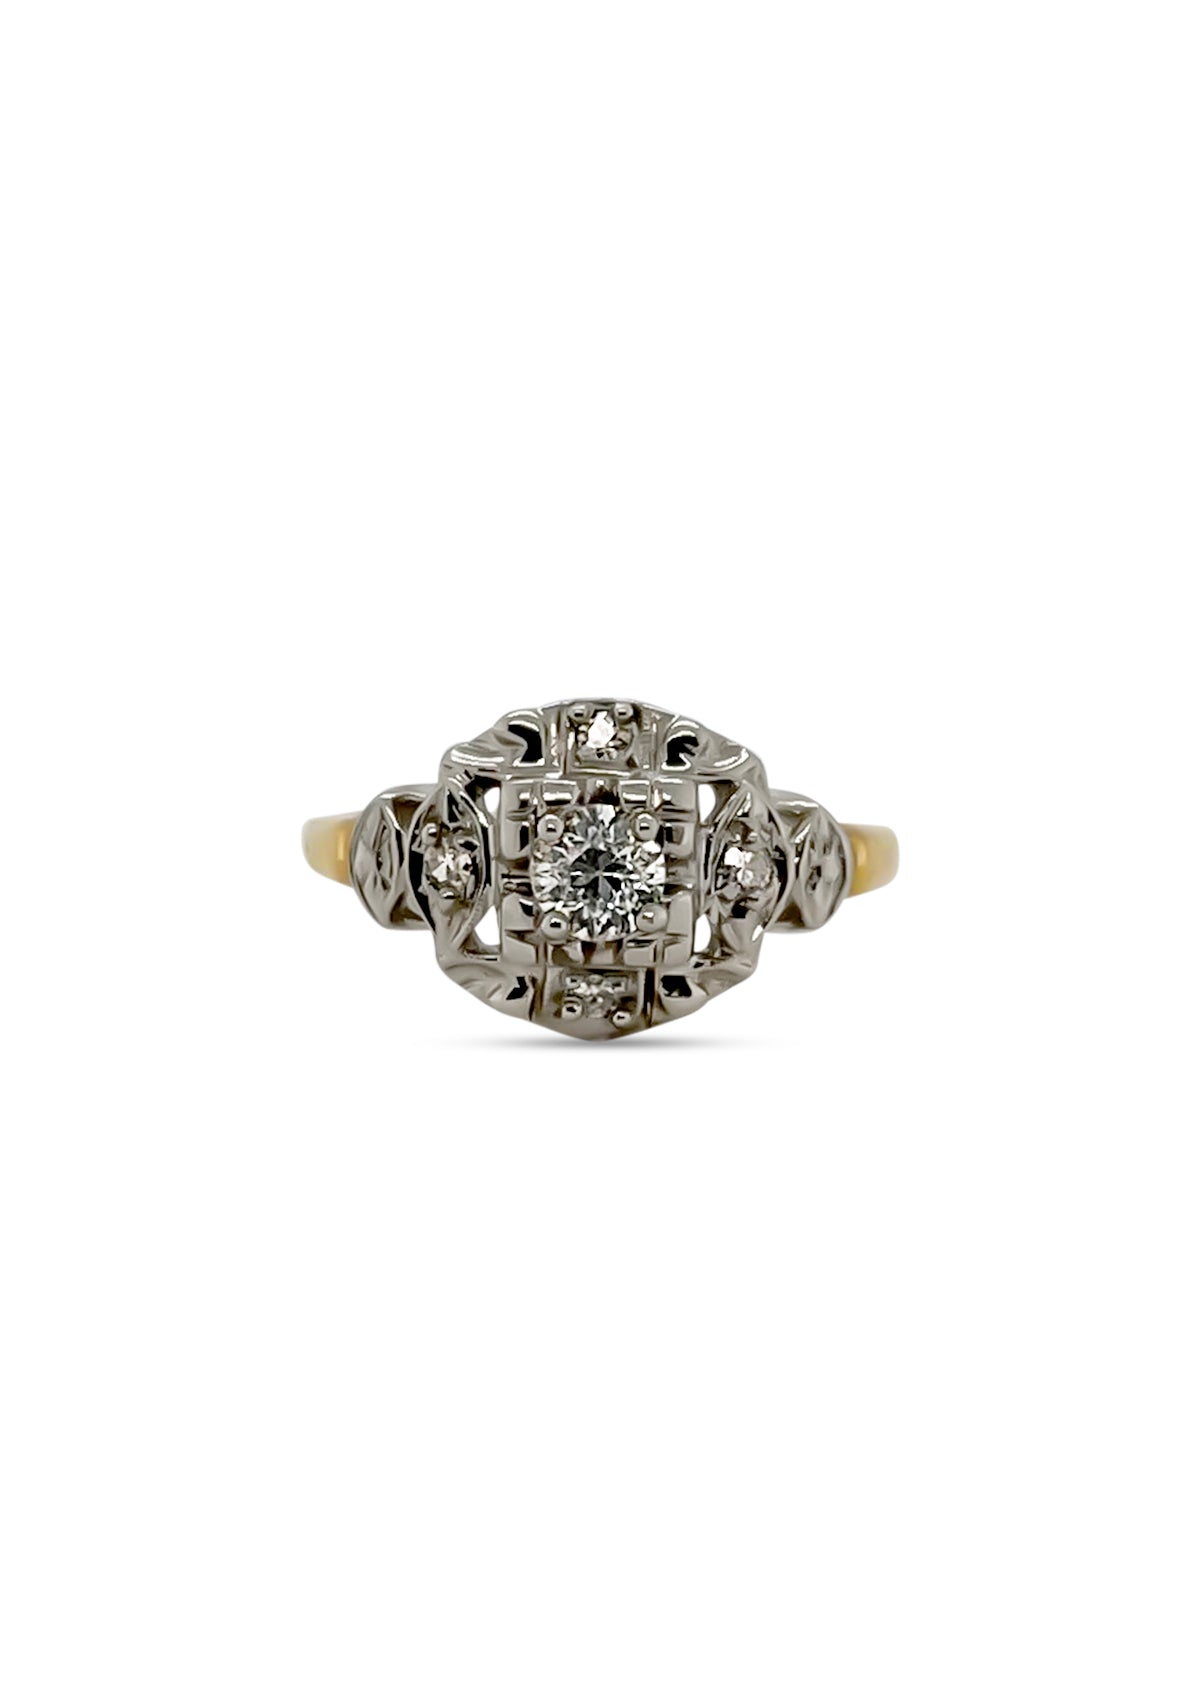 Five Baguette Diamonds Engagement Ring - 0.25 Carat Diamond Ring – ARTEMER